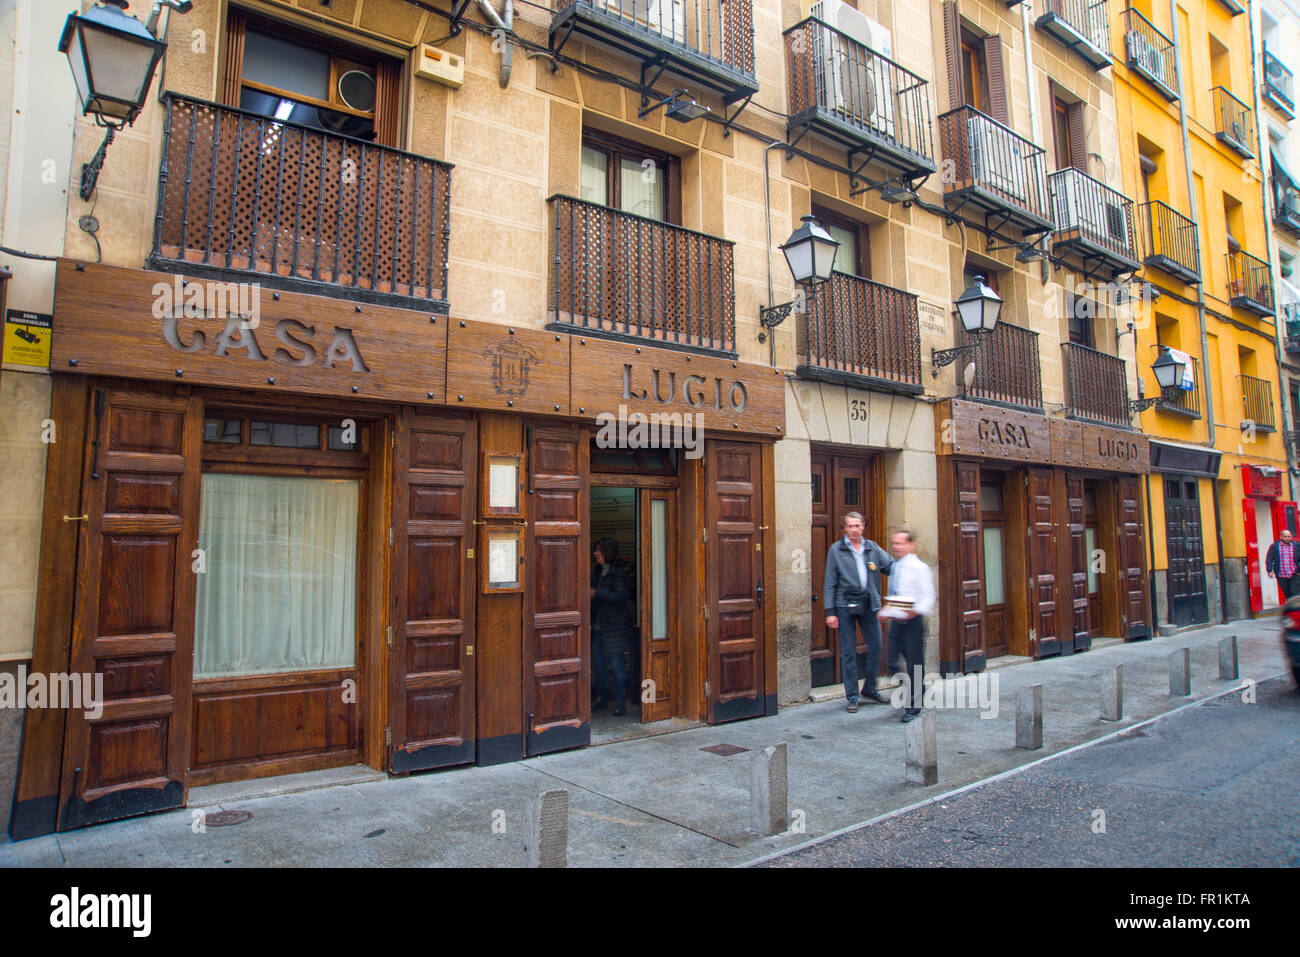 Facade of Casa Lucio restaurant. Cava Baja street, Madrid, Spain. Stock Photo